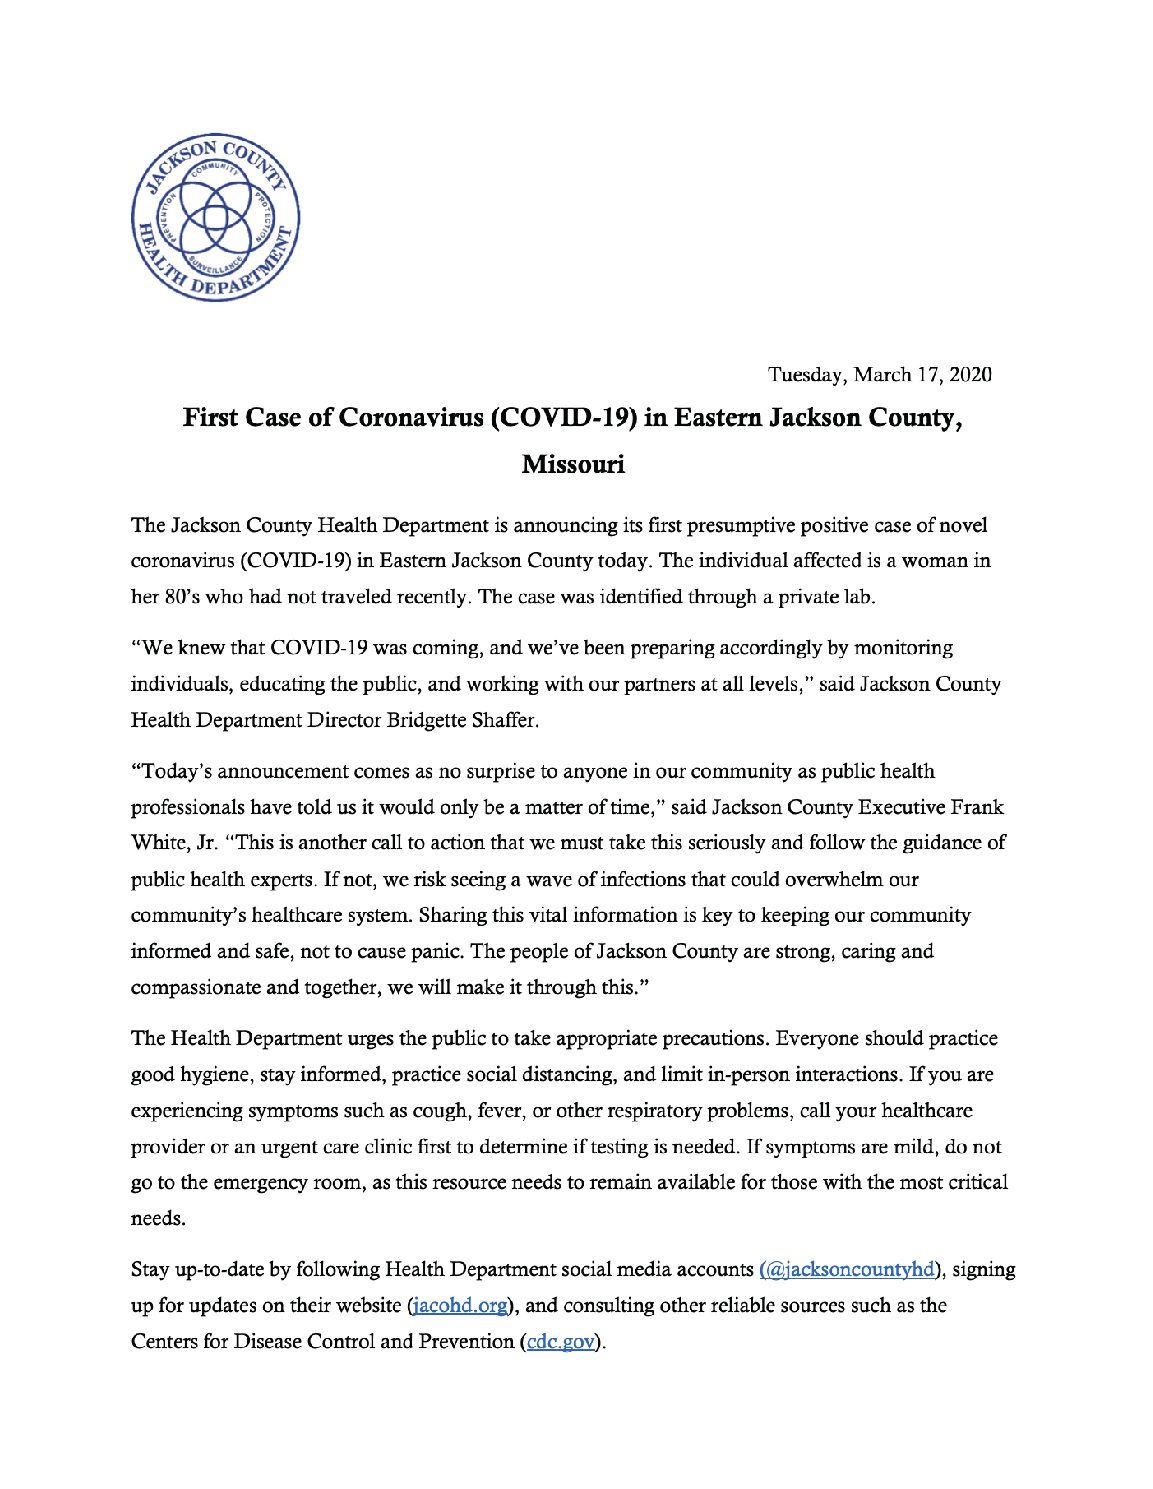 First Case of Coronavirus in Eastern Jackson County